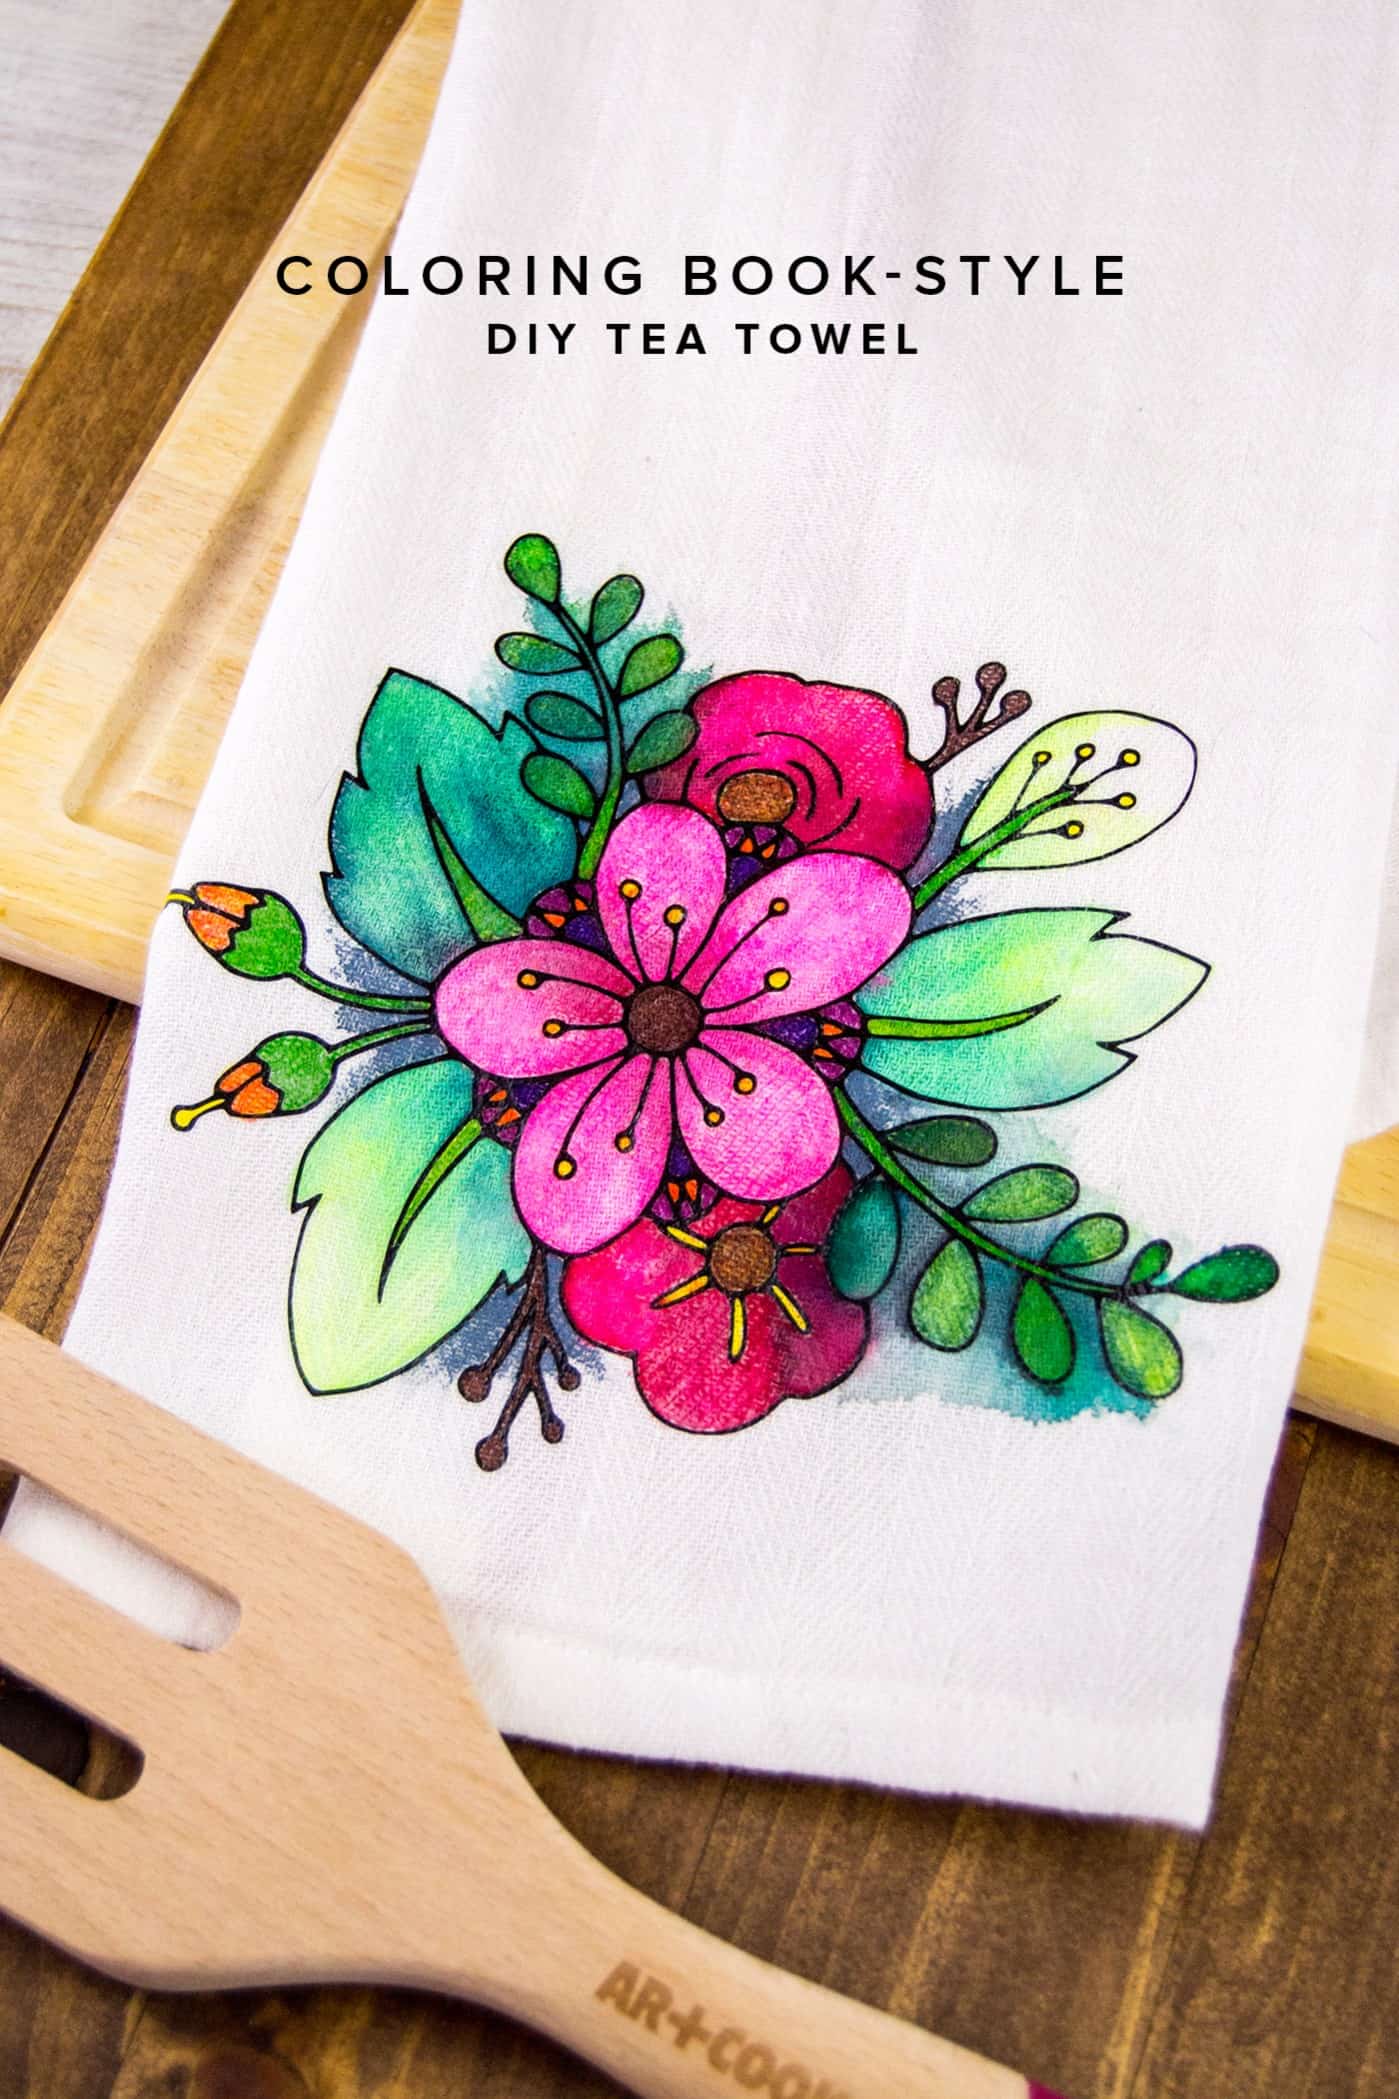 DIY Tea Towel with Coloring Book Inspiration